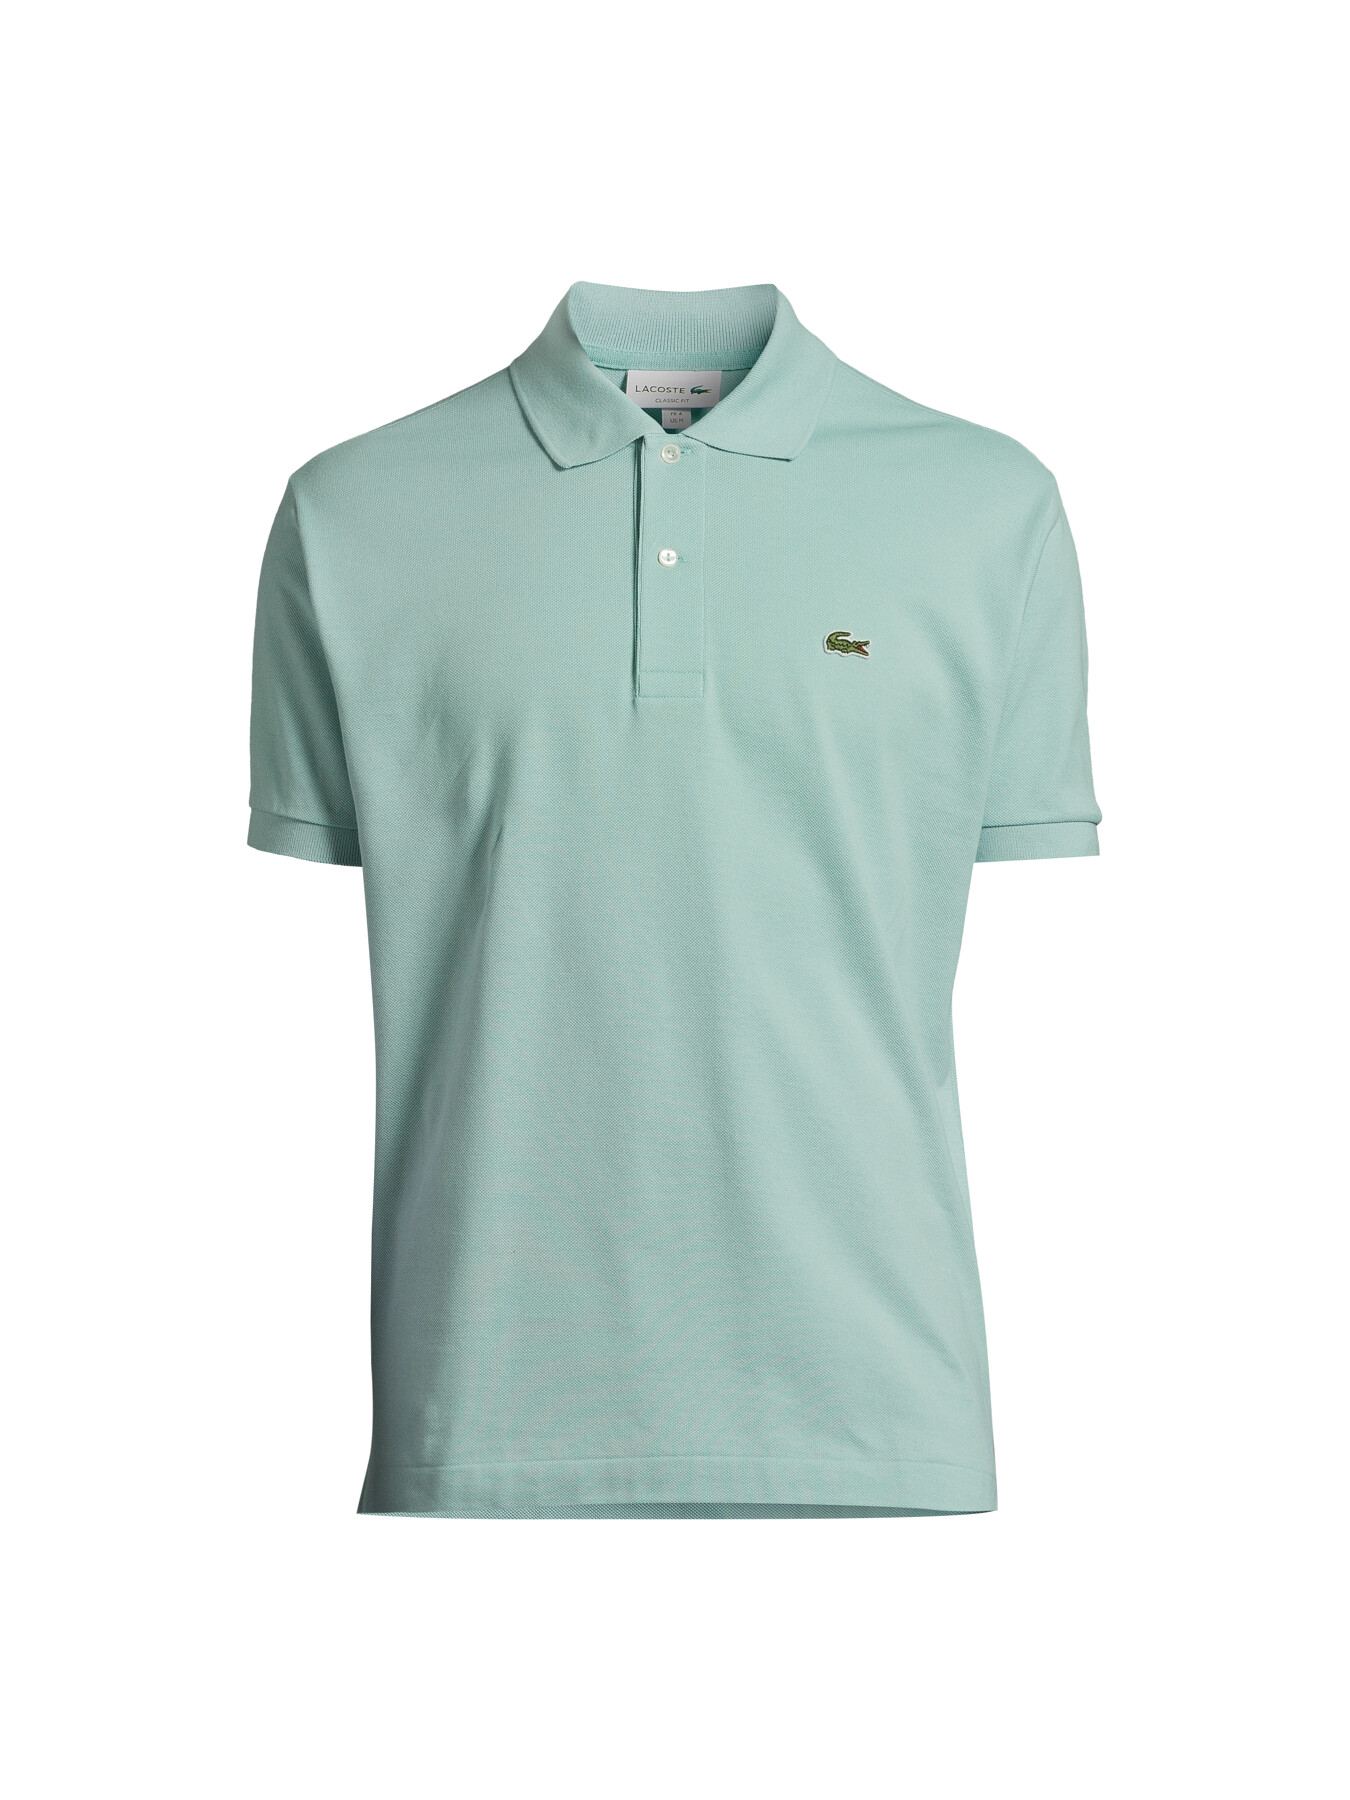 Lacoste Classic Fit Polo Shirt | Polo Shirt | Fenwick